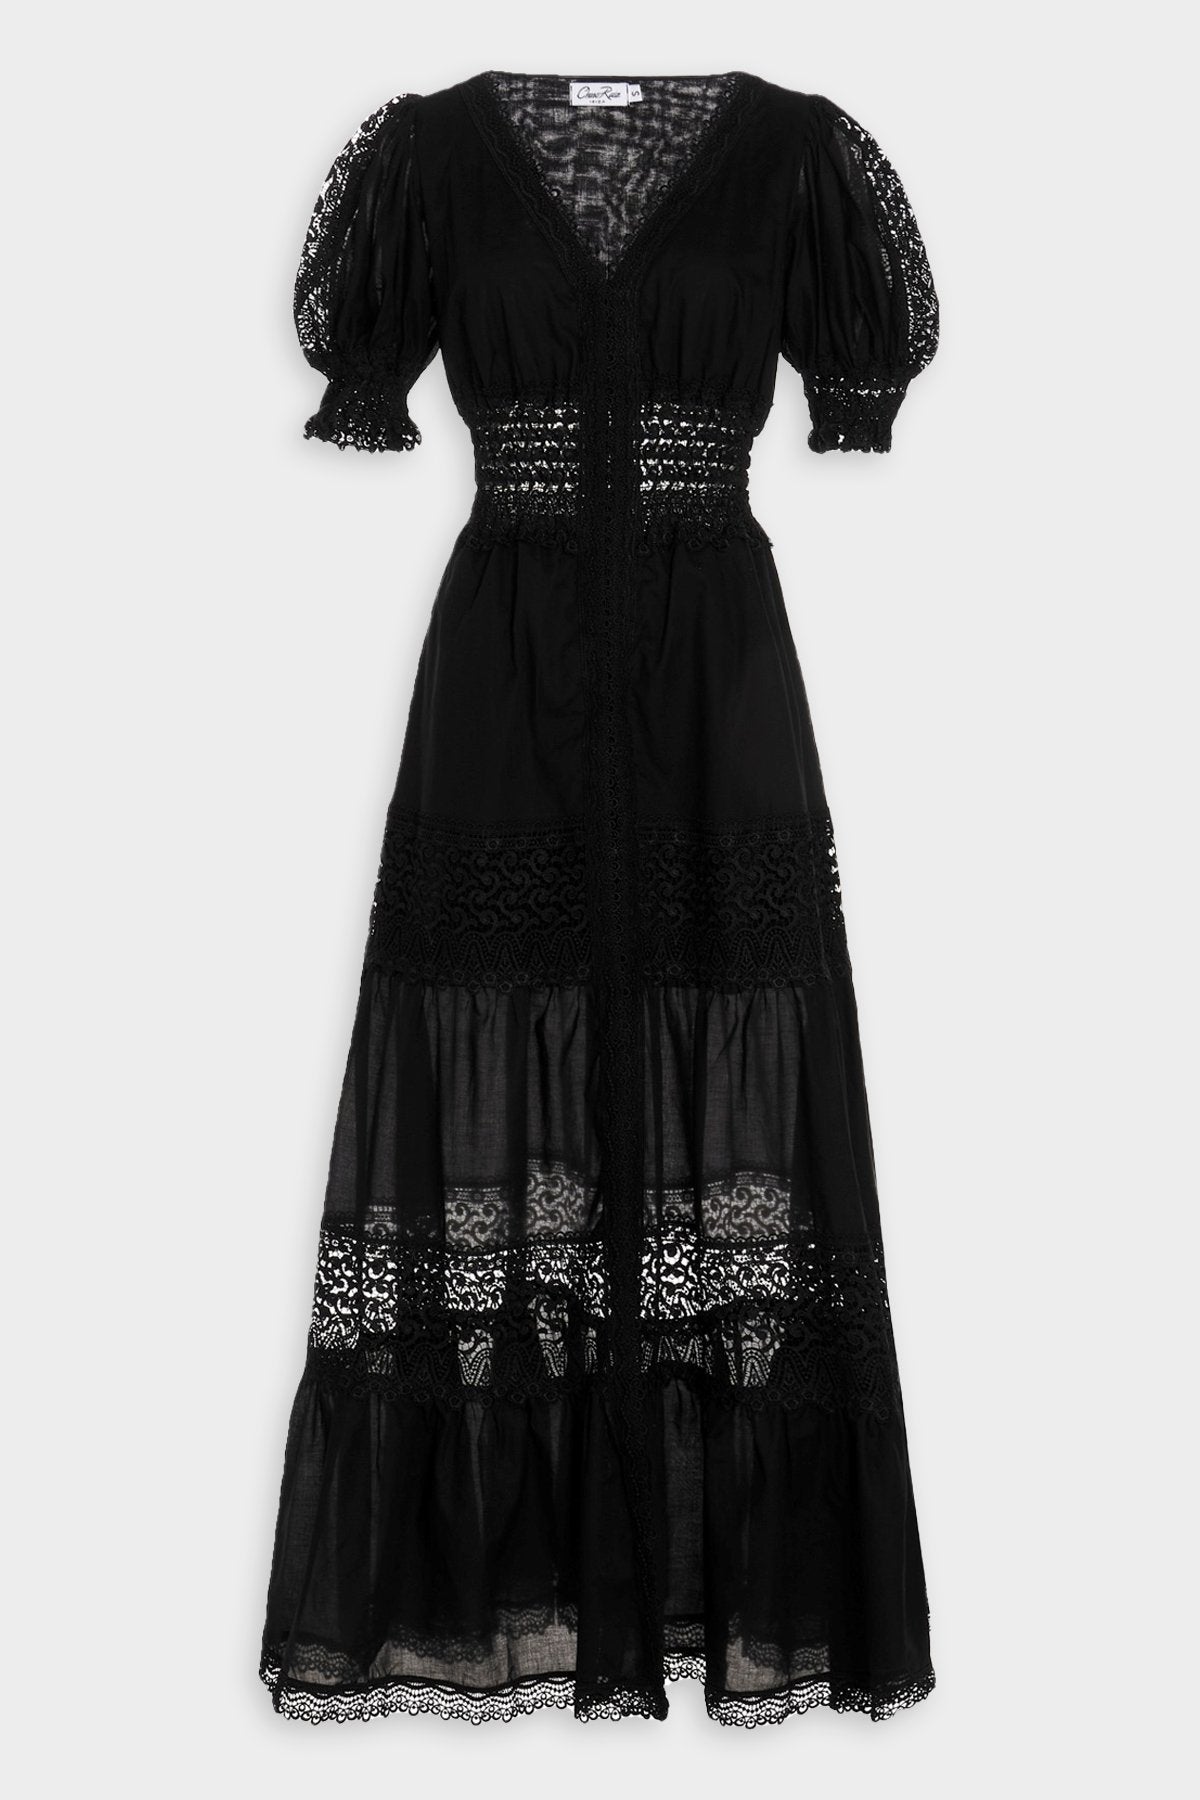 Clemence Long Dress in Black - shop-olivia.com